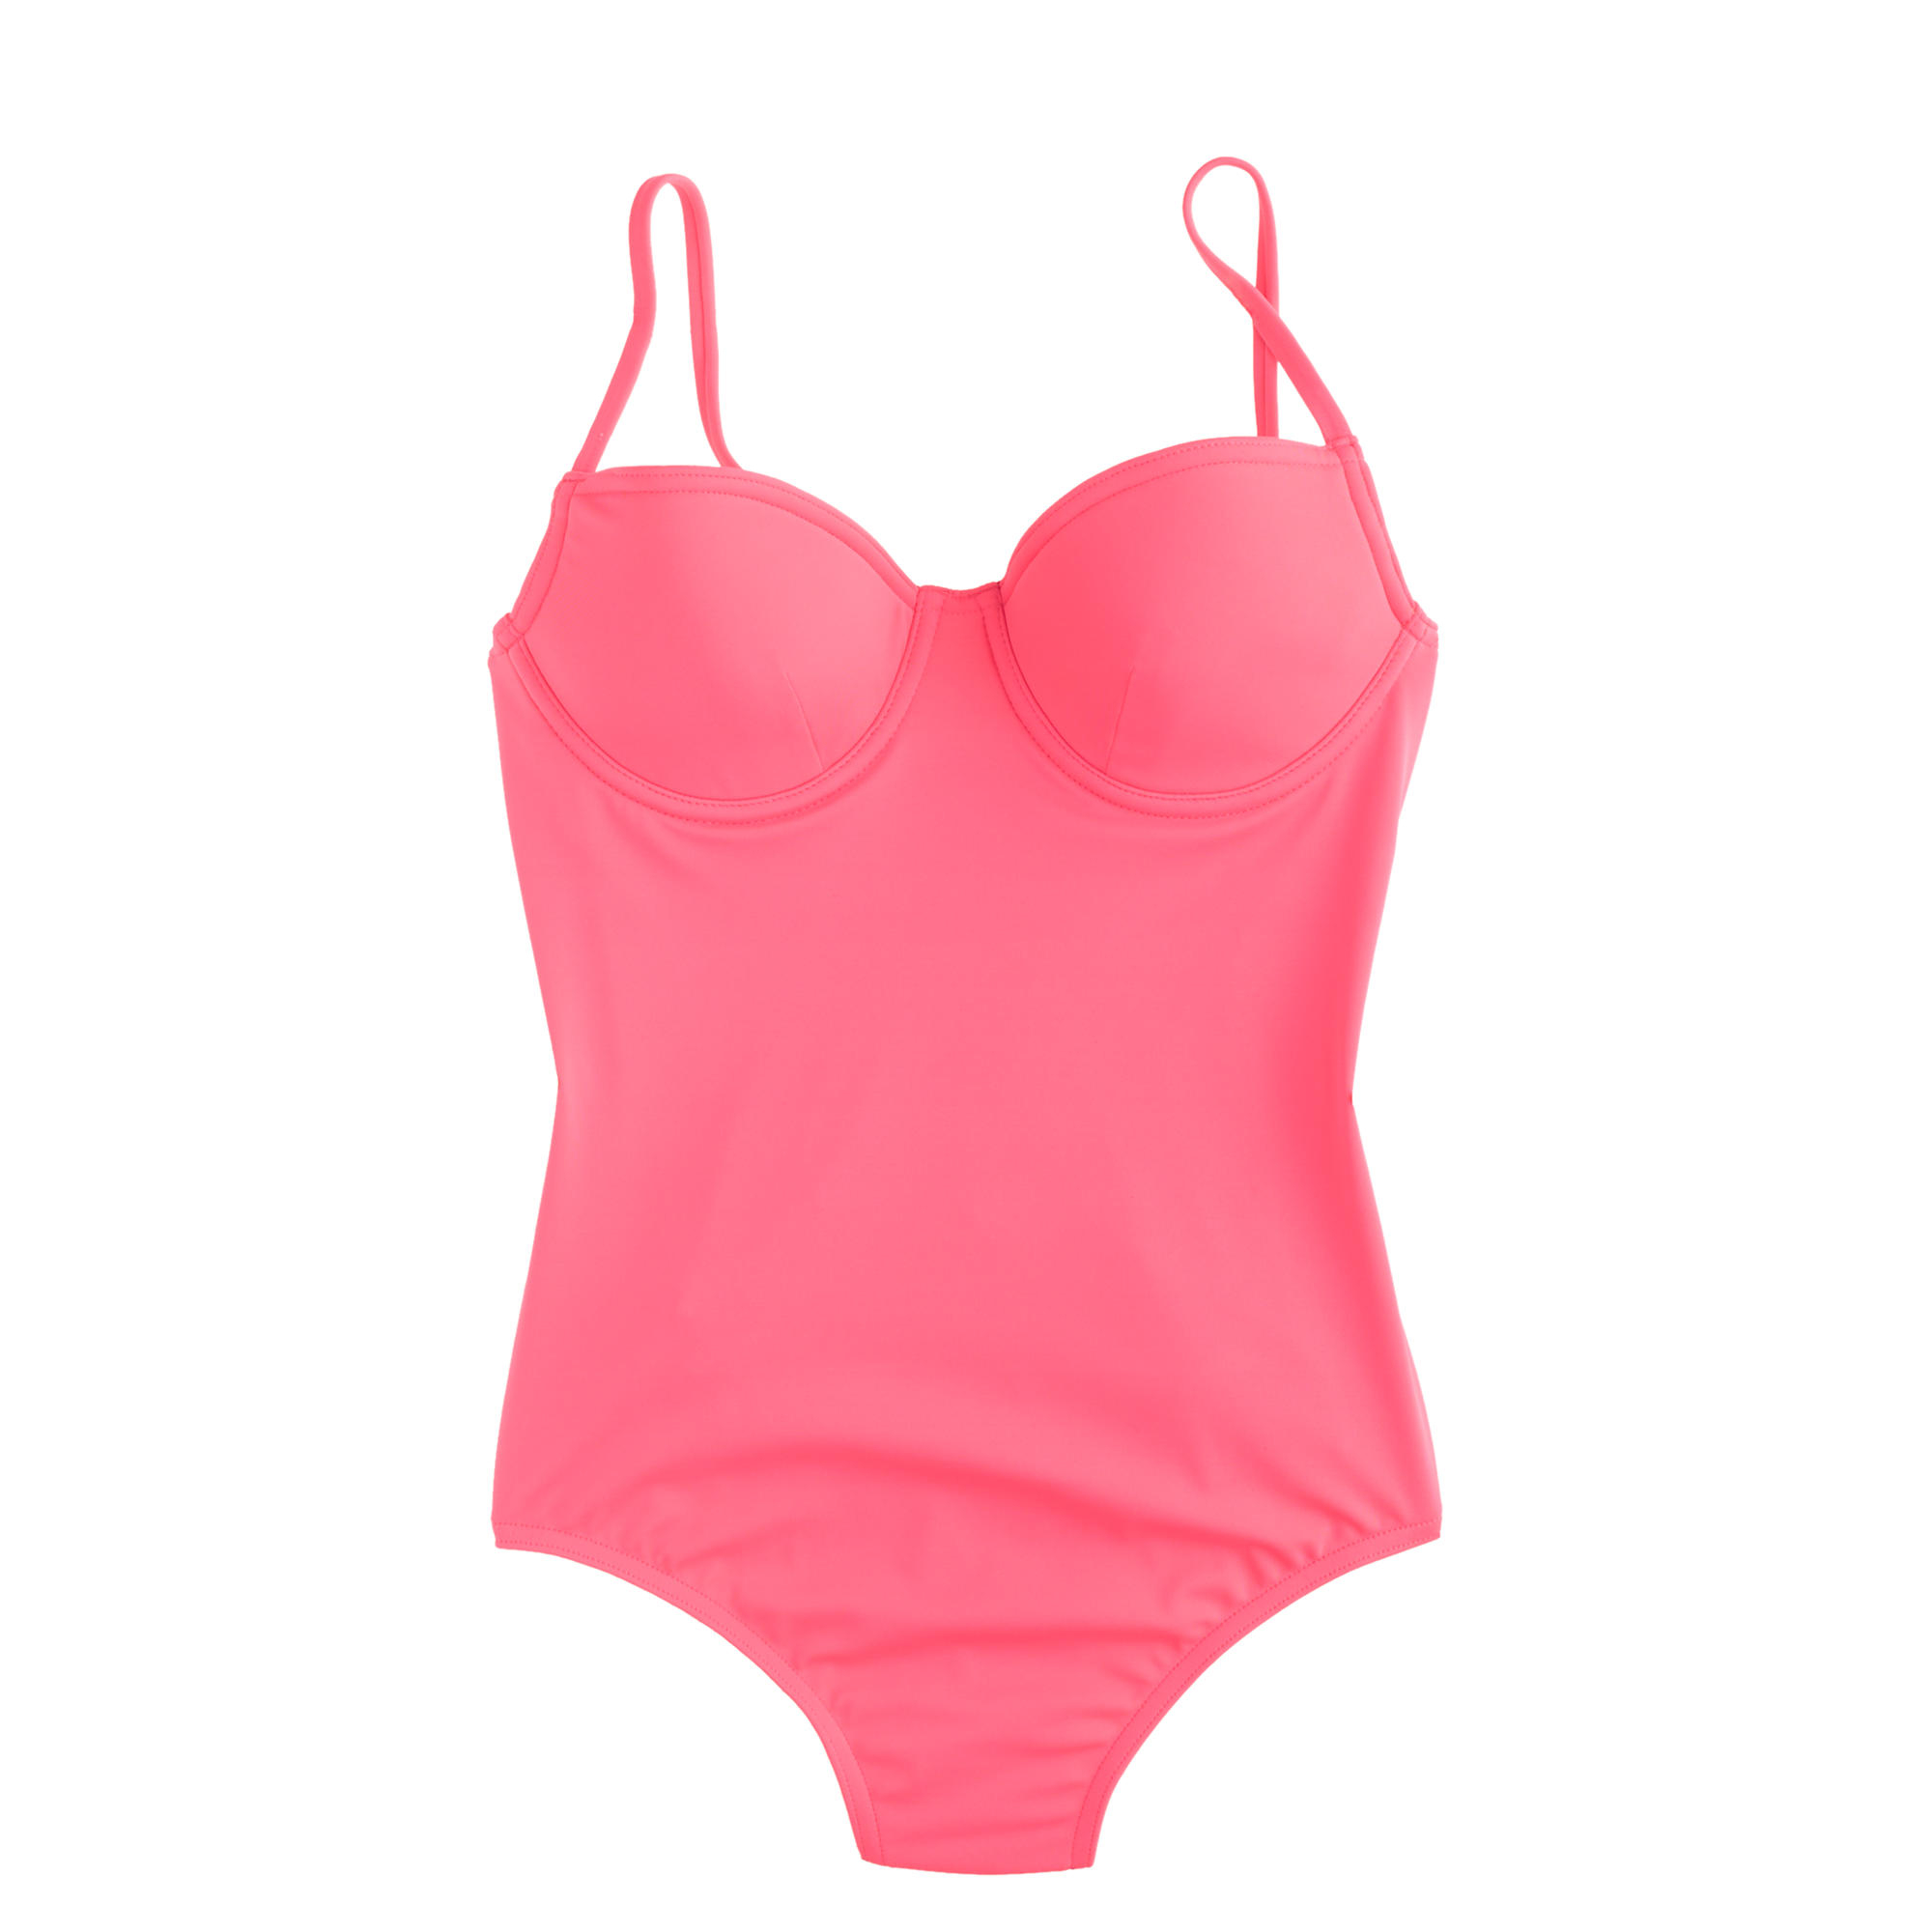 J.crew Neon Underwire One-piece Swimsuit in Pink (neon pink) | Lyst